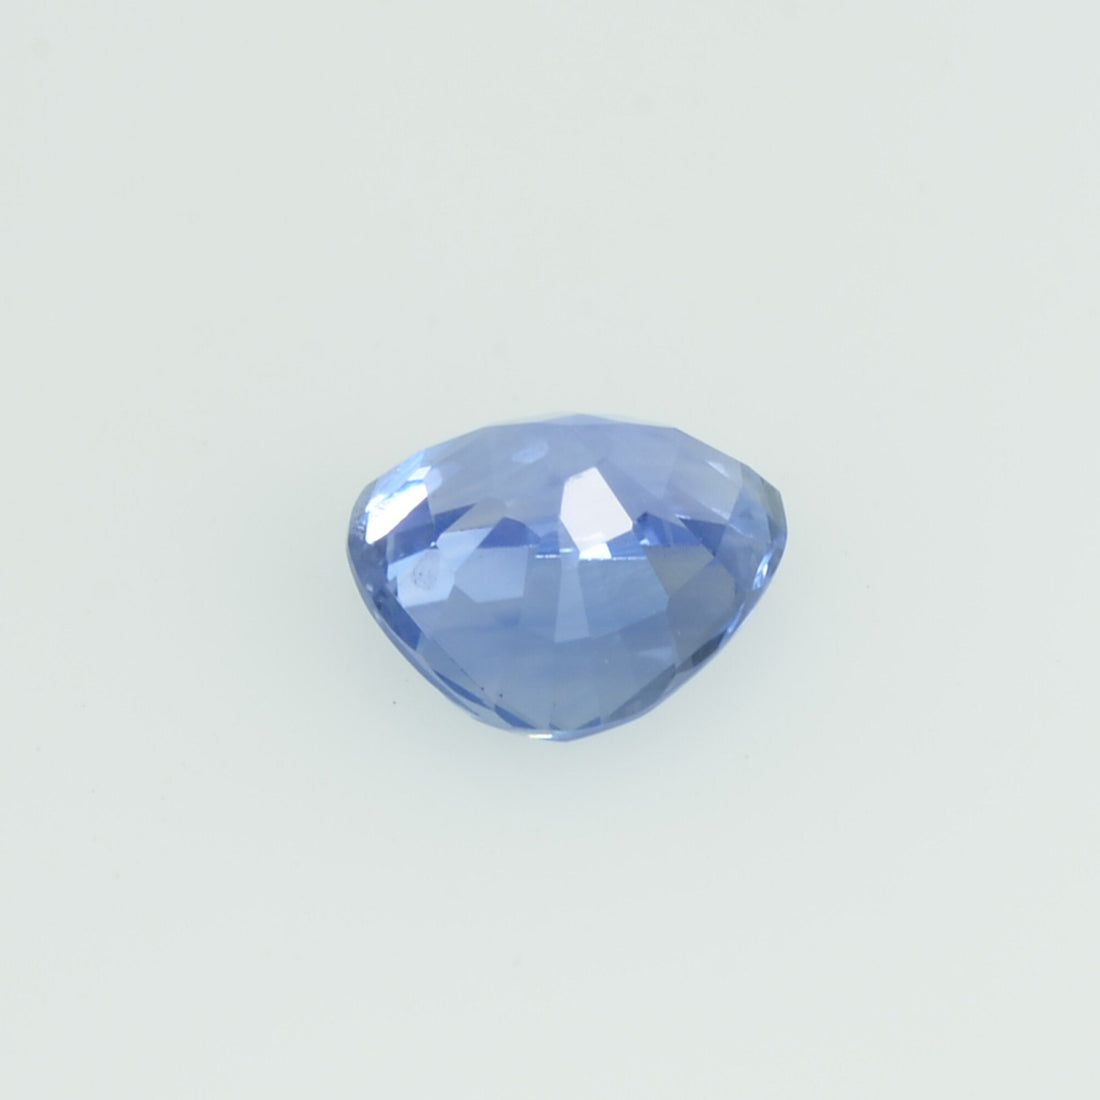 0.33 Cts Natural Blue Sapphire Loose Gemstone Fancy Trillion Cut